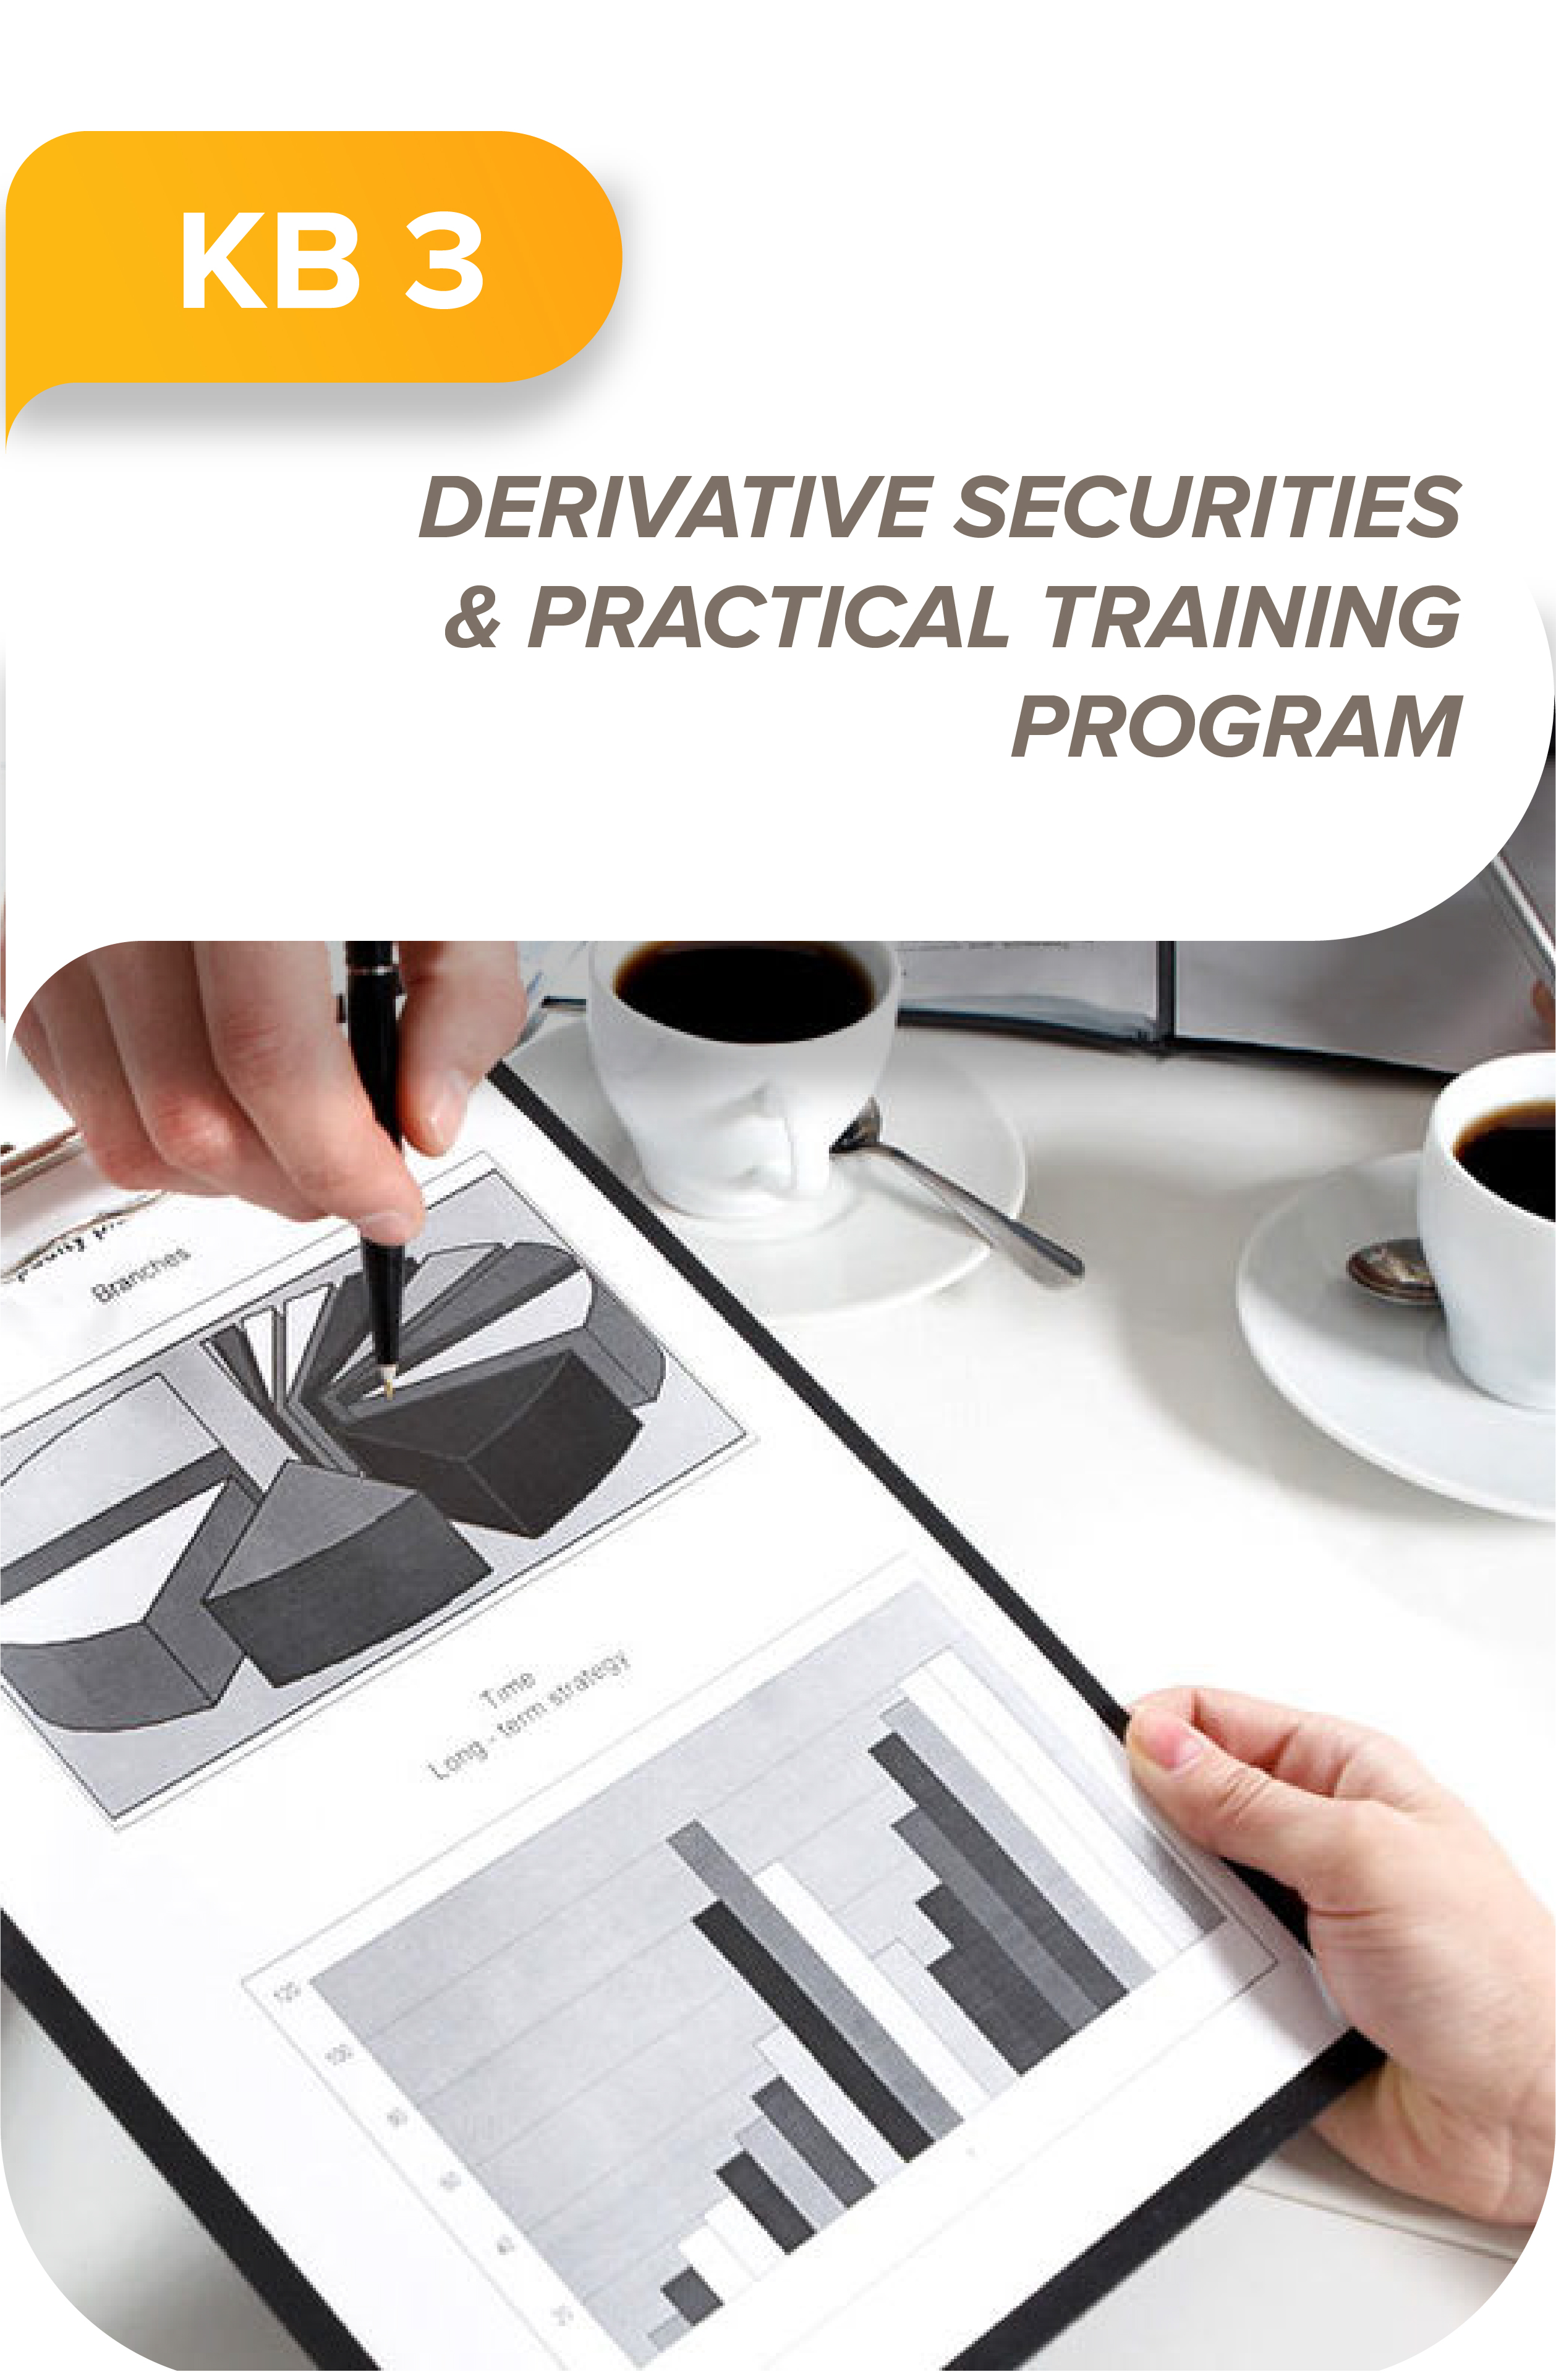 Derivative securities and practical programs